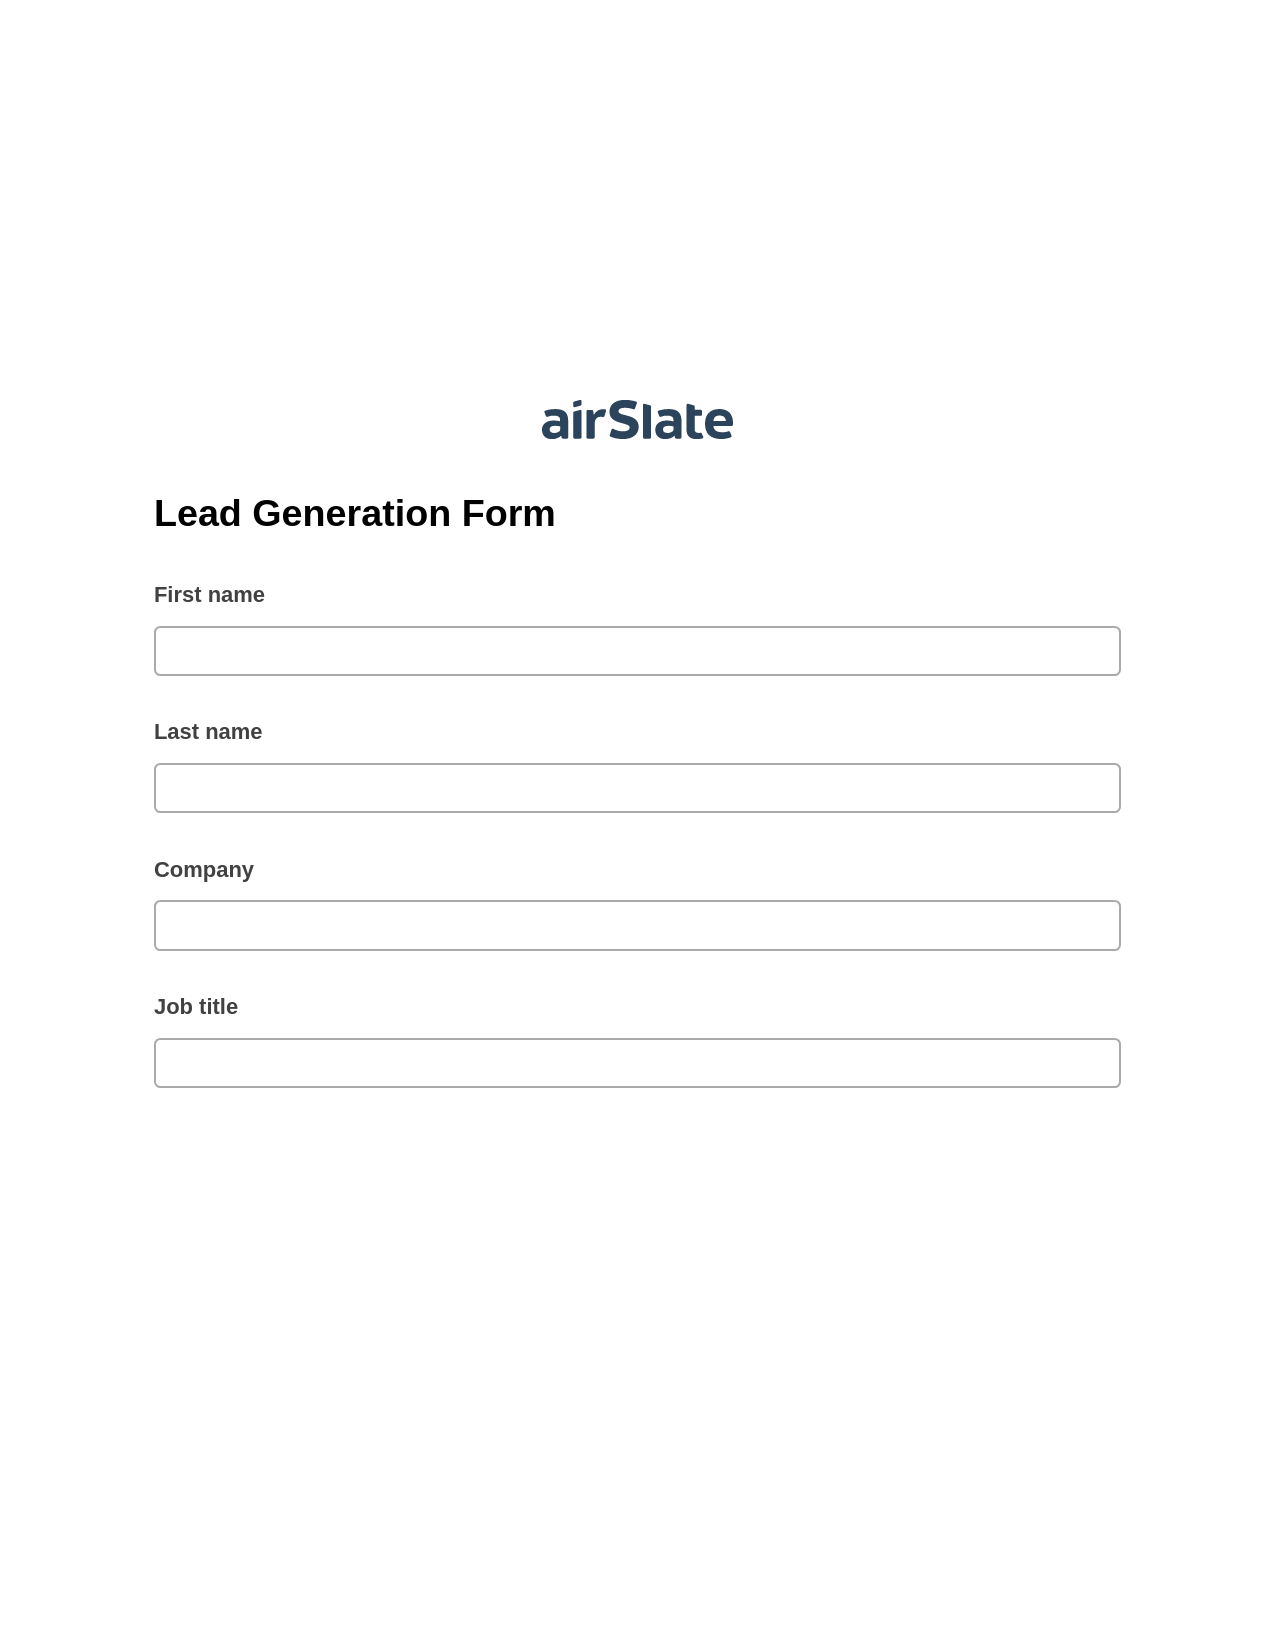 Multirole Lead Generation Form Pre-fill Document Bot, Create Slate every Google Sheet Update Bot, Export to Google Sheet Bot